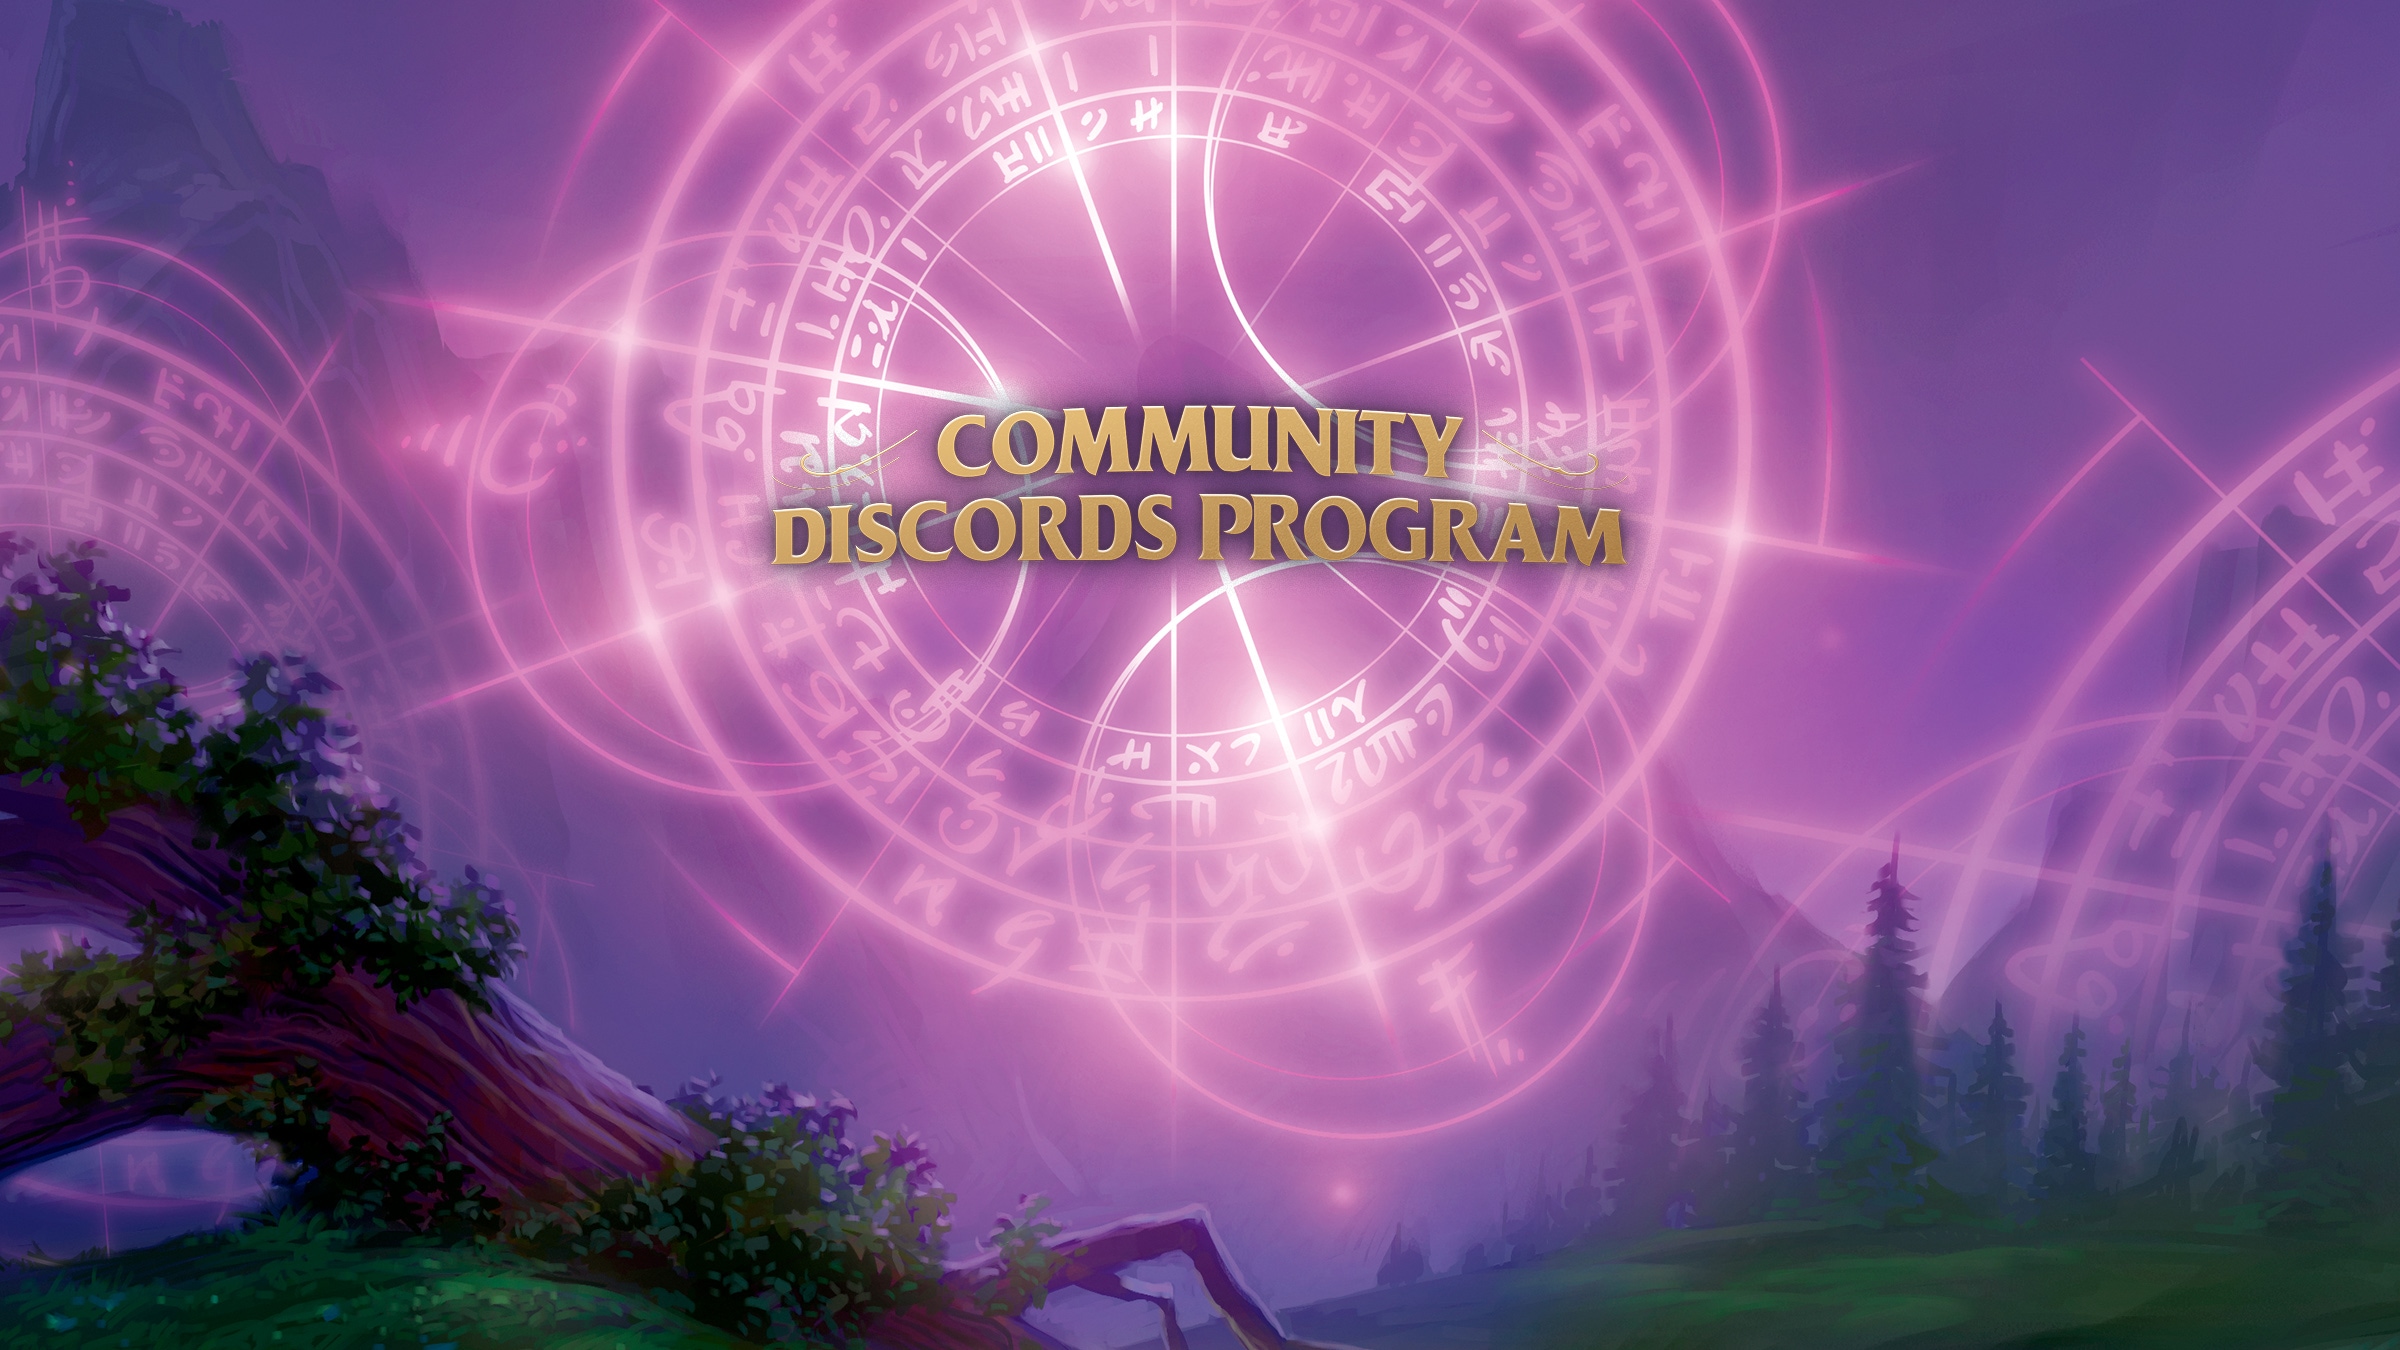 Introducing the Community Discords Program!